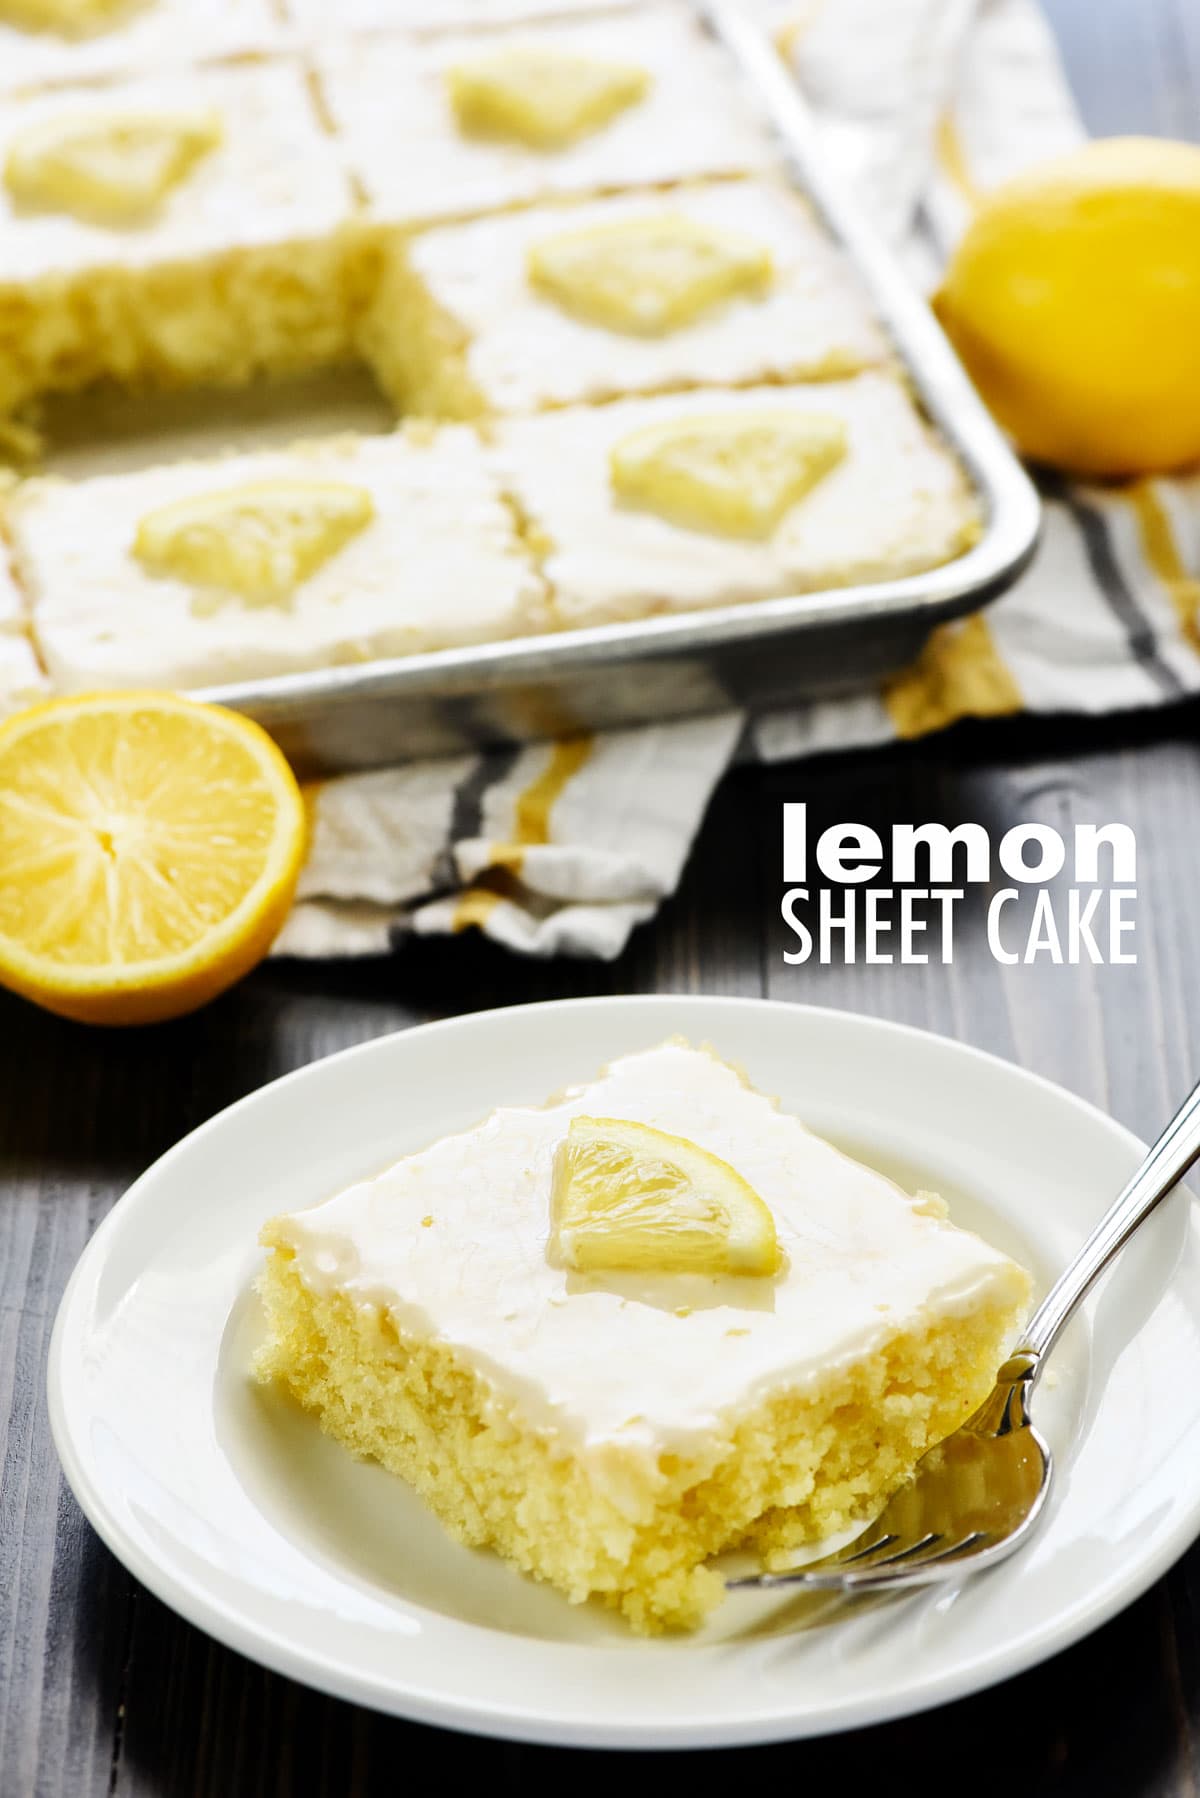 Lemon Sheet Cake with text overlay.